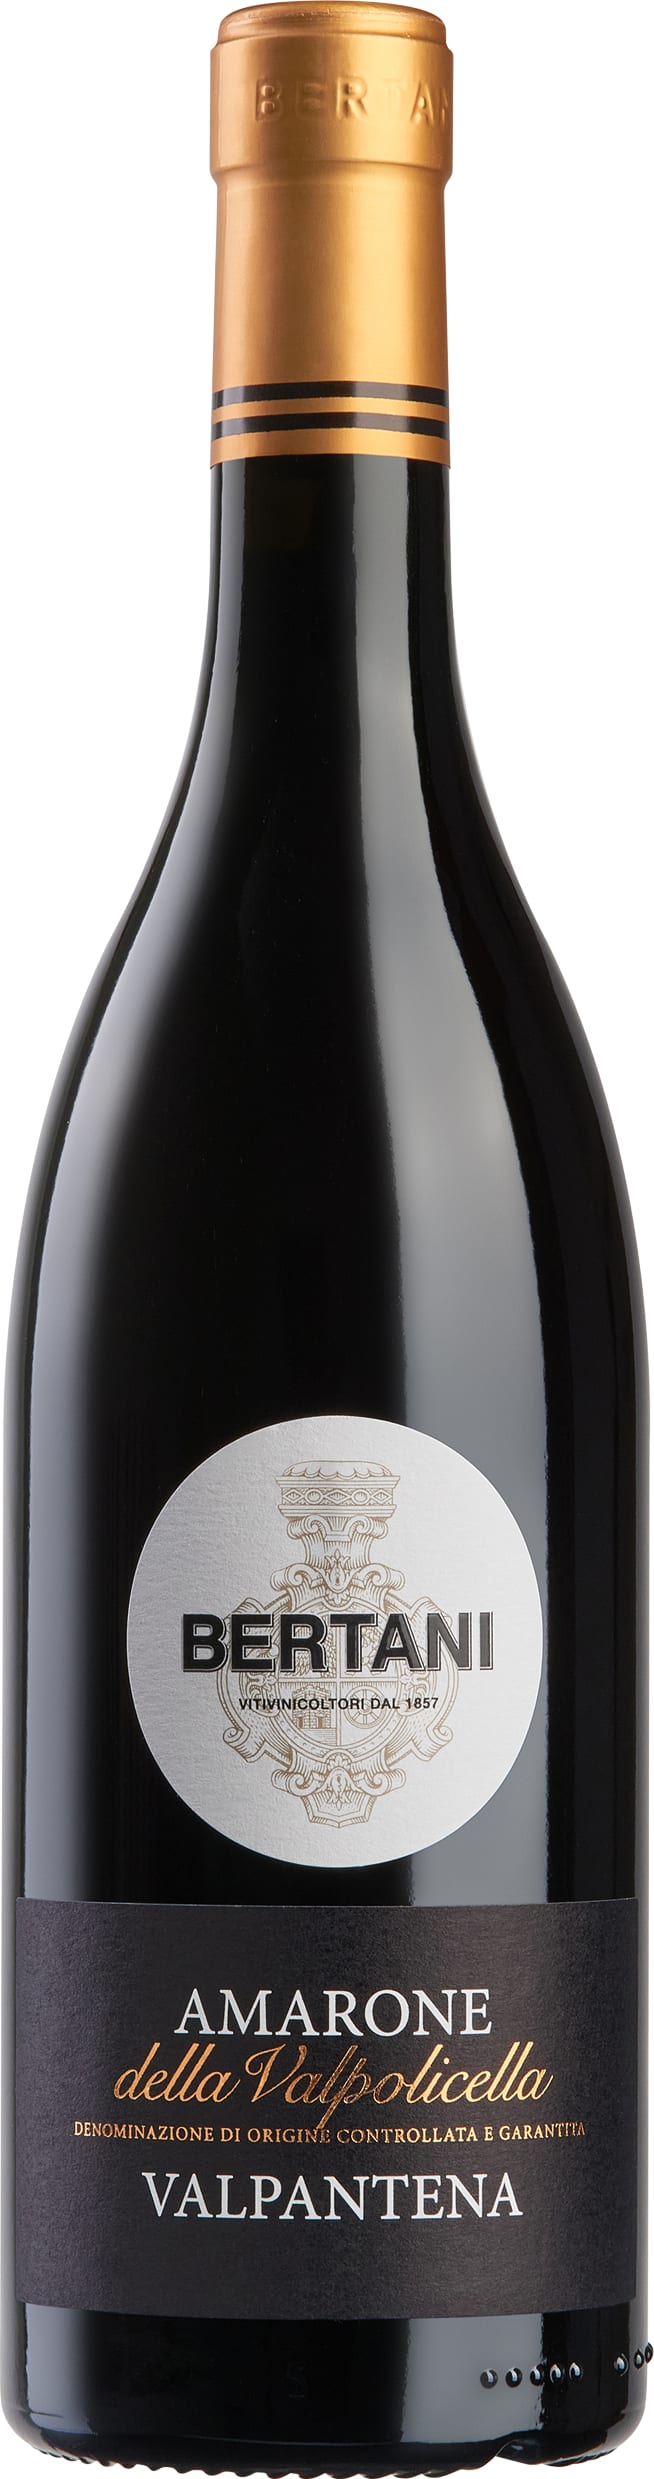 Bertani Amarone Valpantena DOCG 2020 75cl - Buy Bertani Wines from GREAT WINES DIRECT wine shop